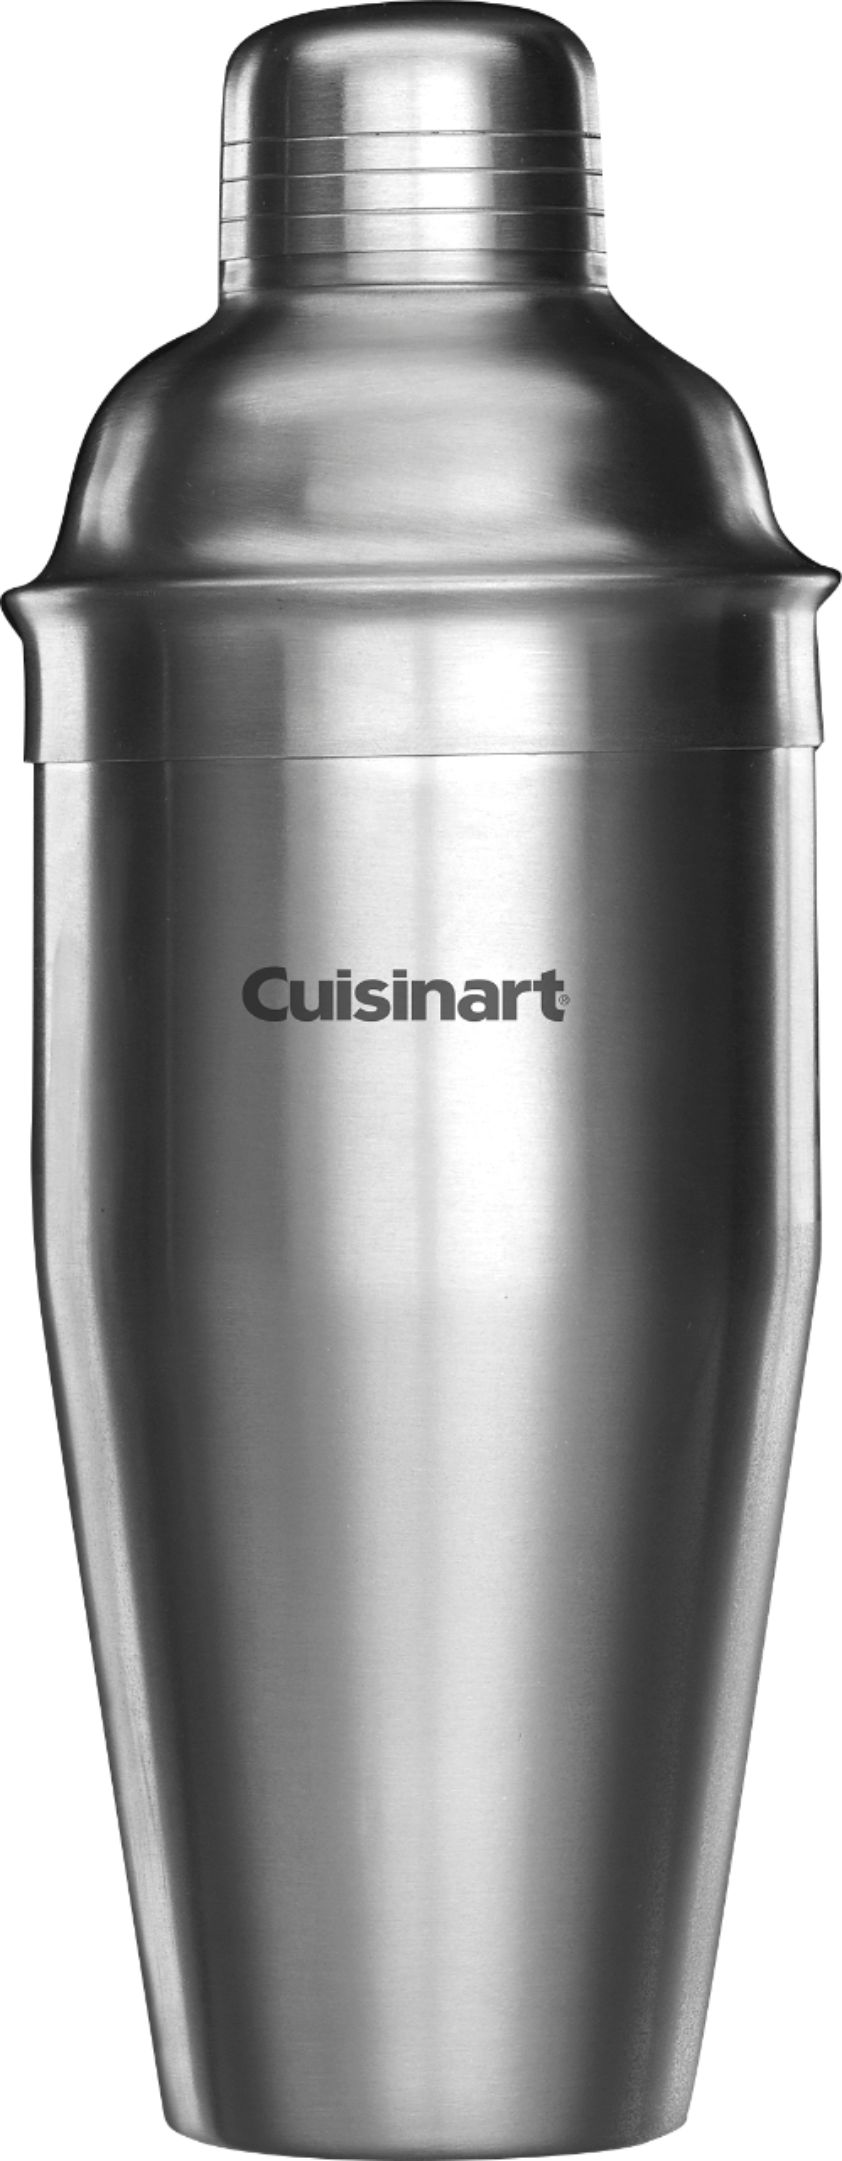 Cuisinart - 6-Piece Barware Set - Stainless Steel